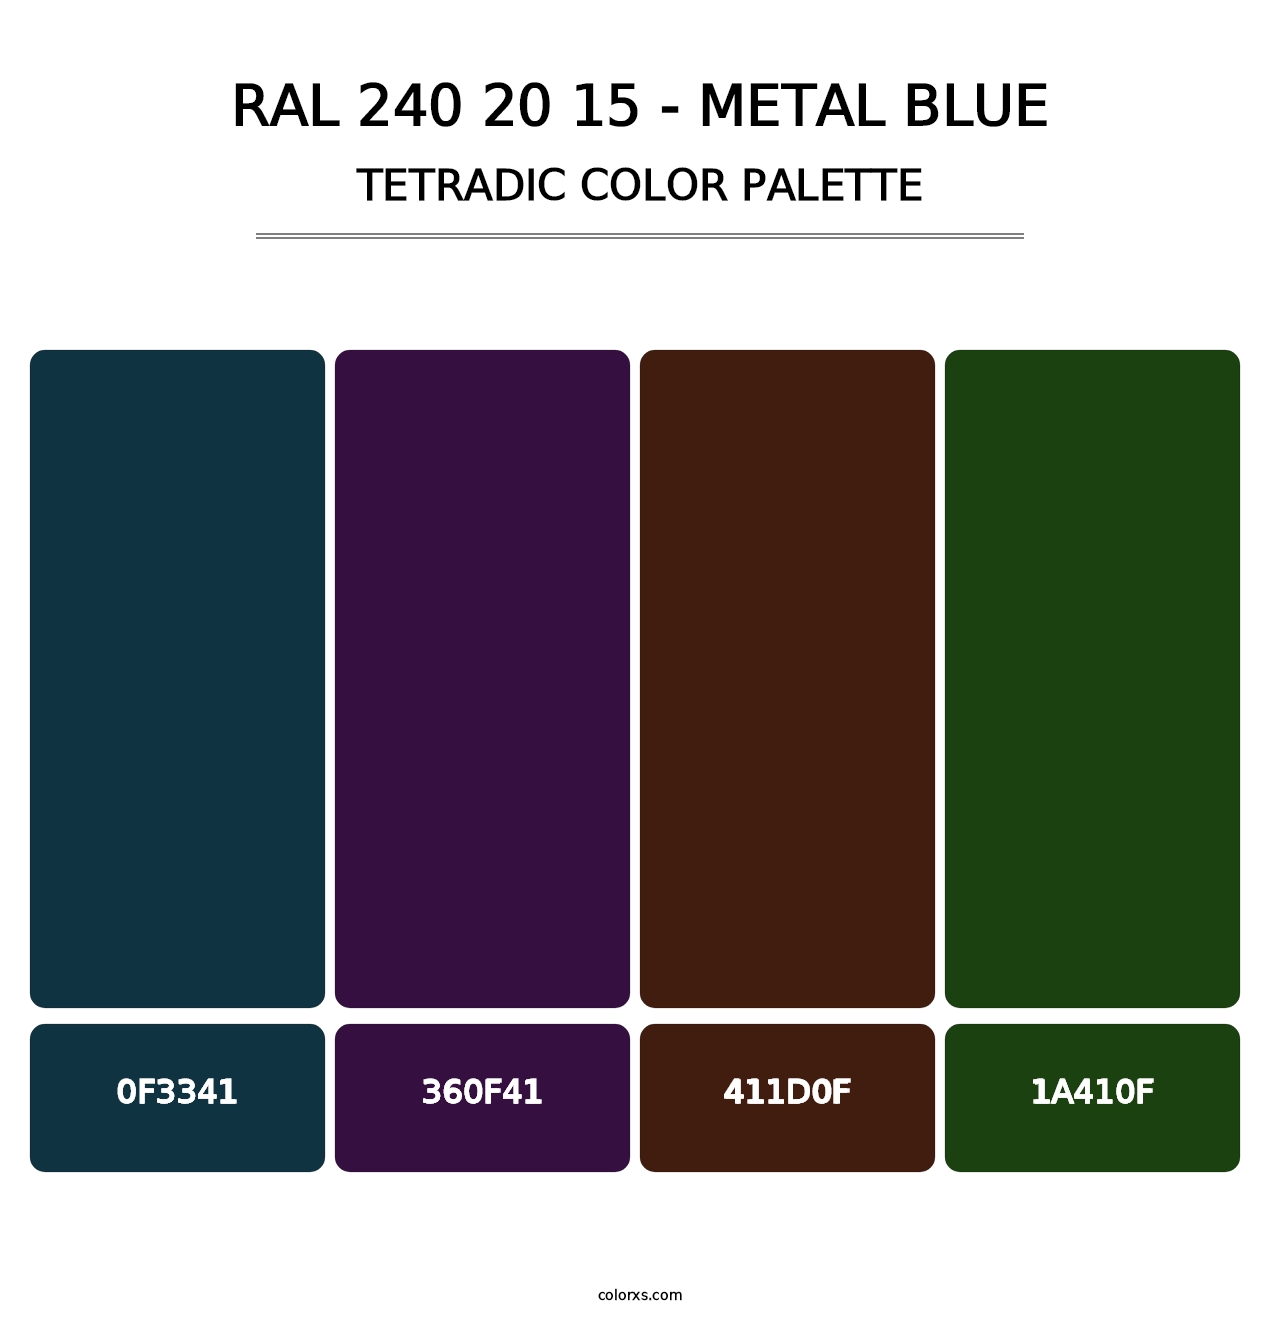 RAL 240 20 15 - Metal Blue - Tetradic Color Palette